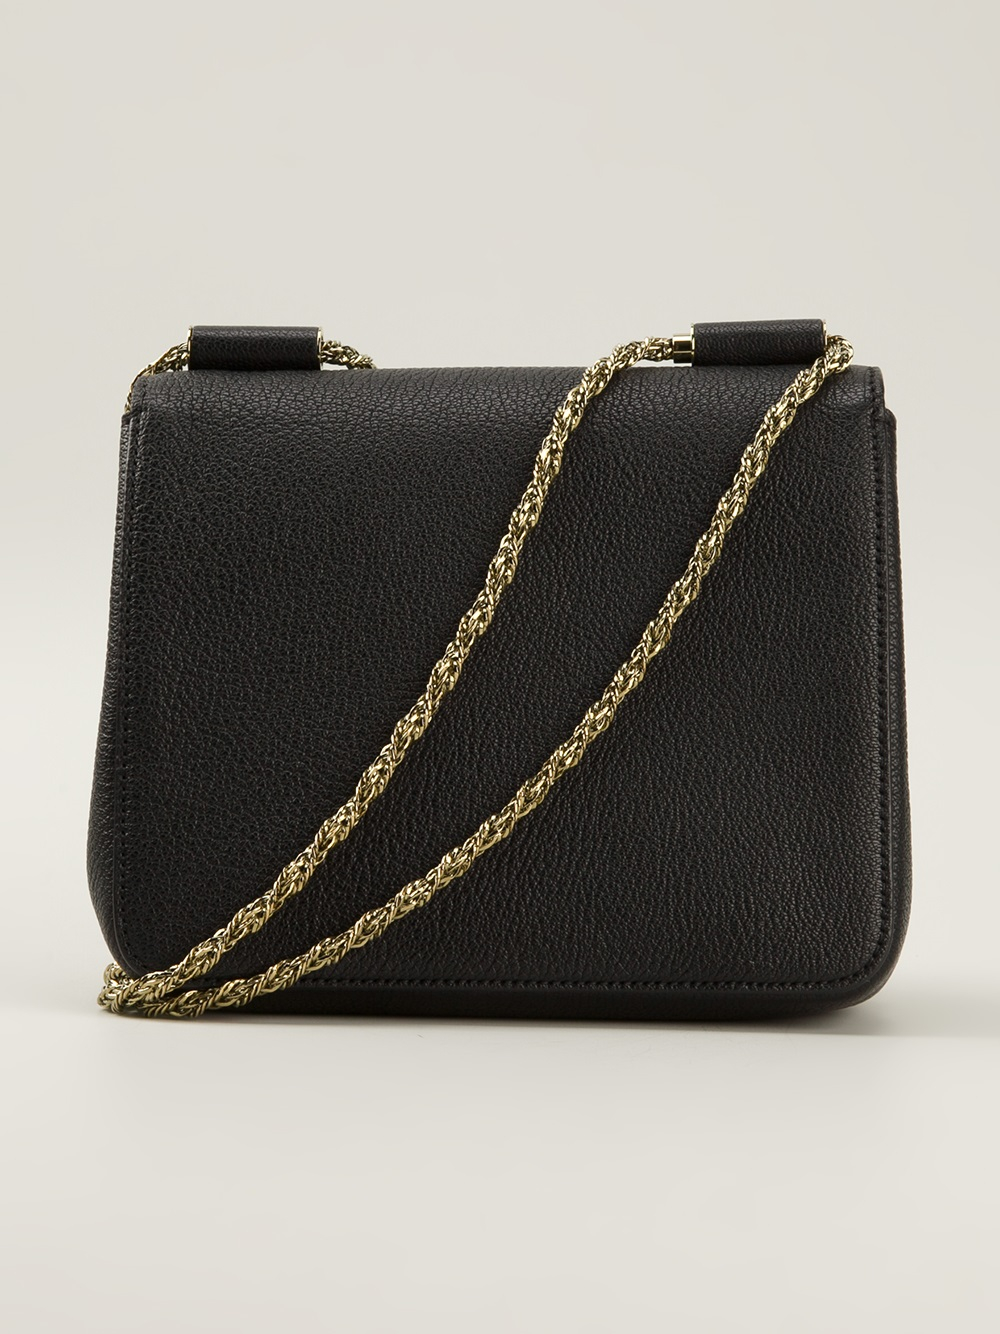 Lyst - Chloé Small 'elsie' Shoulder Bag in Black